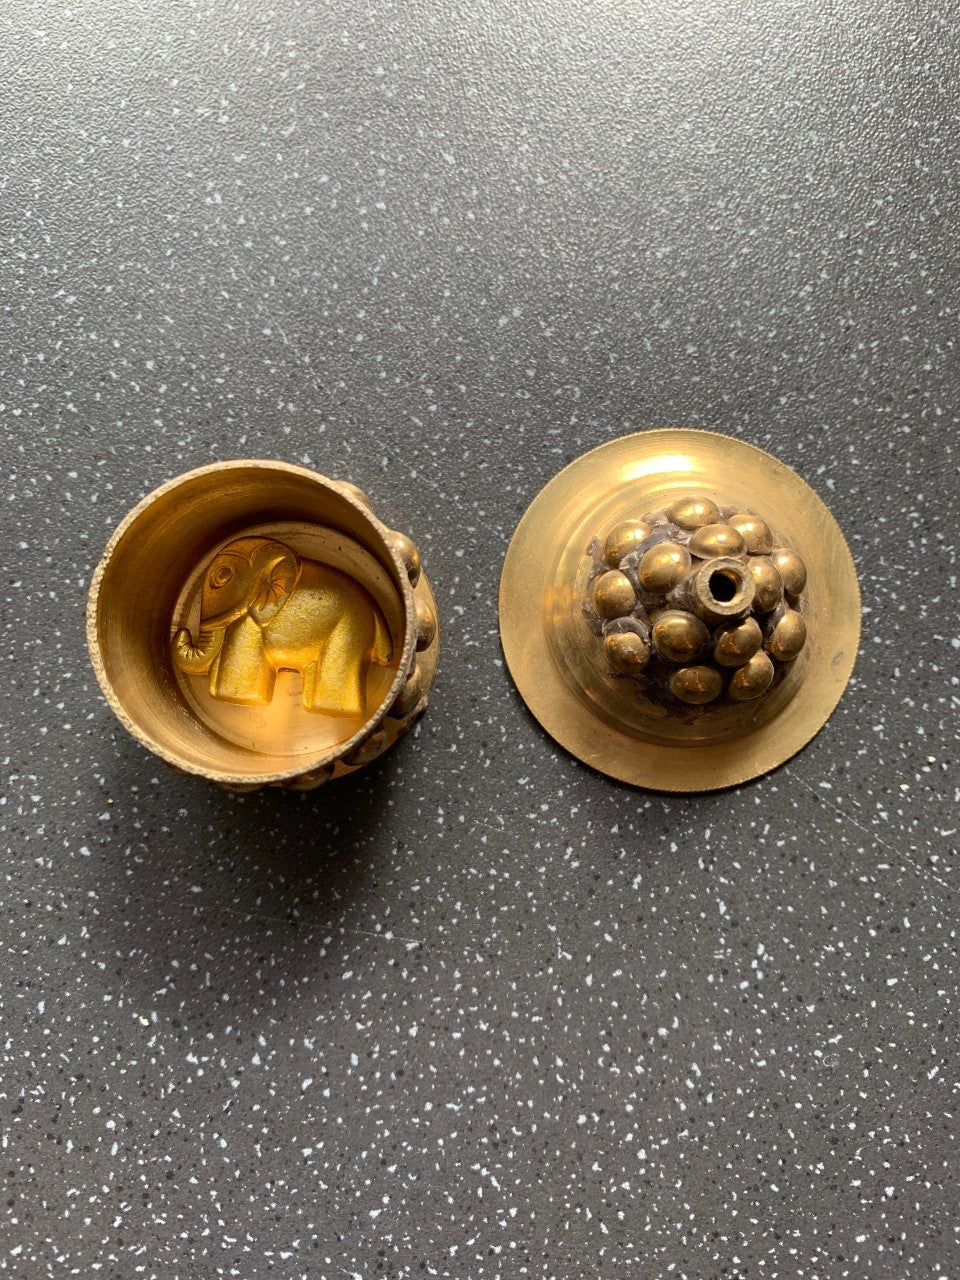 Protection & Success Ganesha Brass Incense Stick Holder Screw Lid Jar for Holding Items 2 in 1 Holder Golden Spiritual Divination Tool